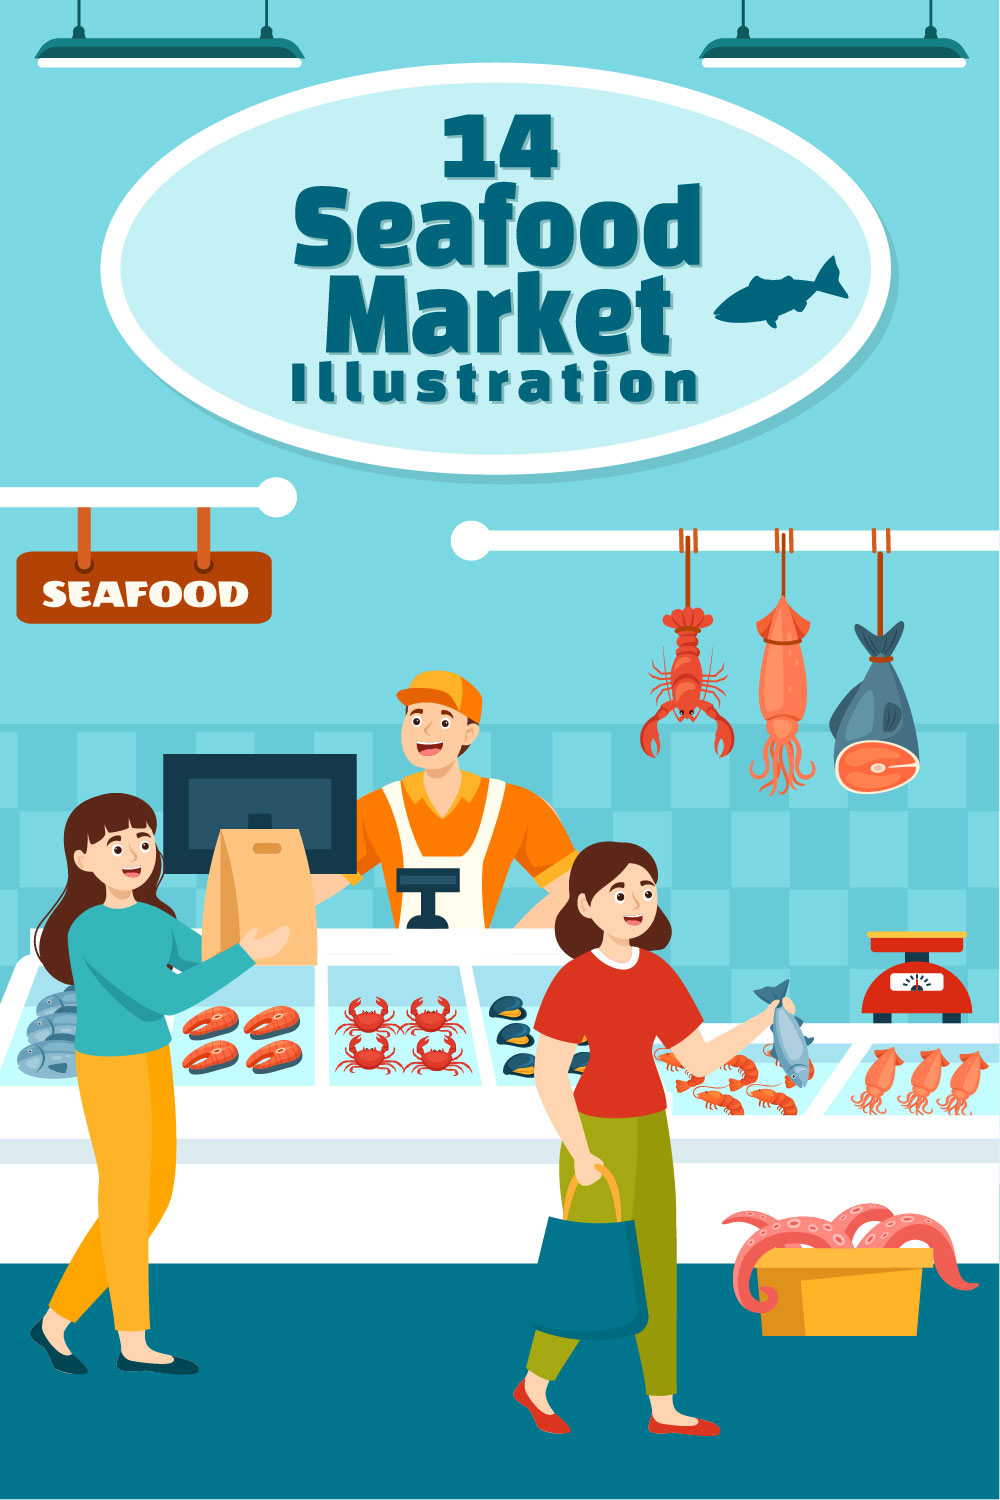 14 Seafood Market Illustration pinterest preview image.